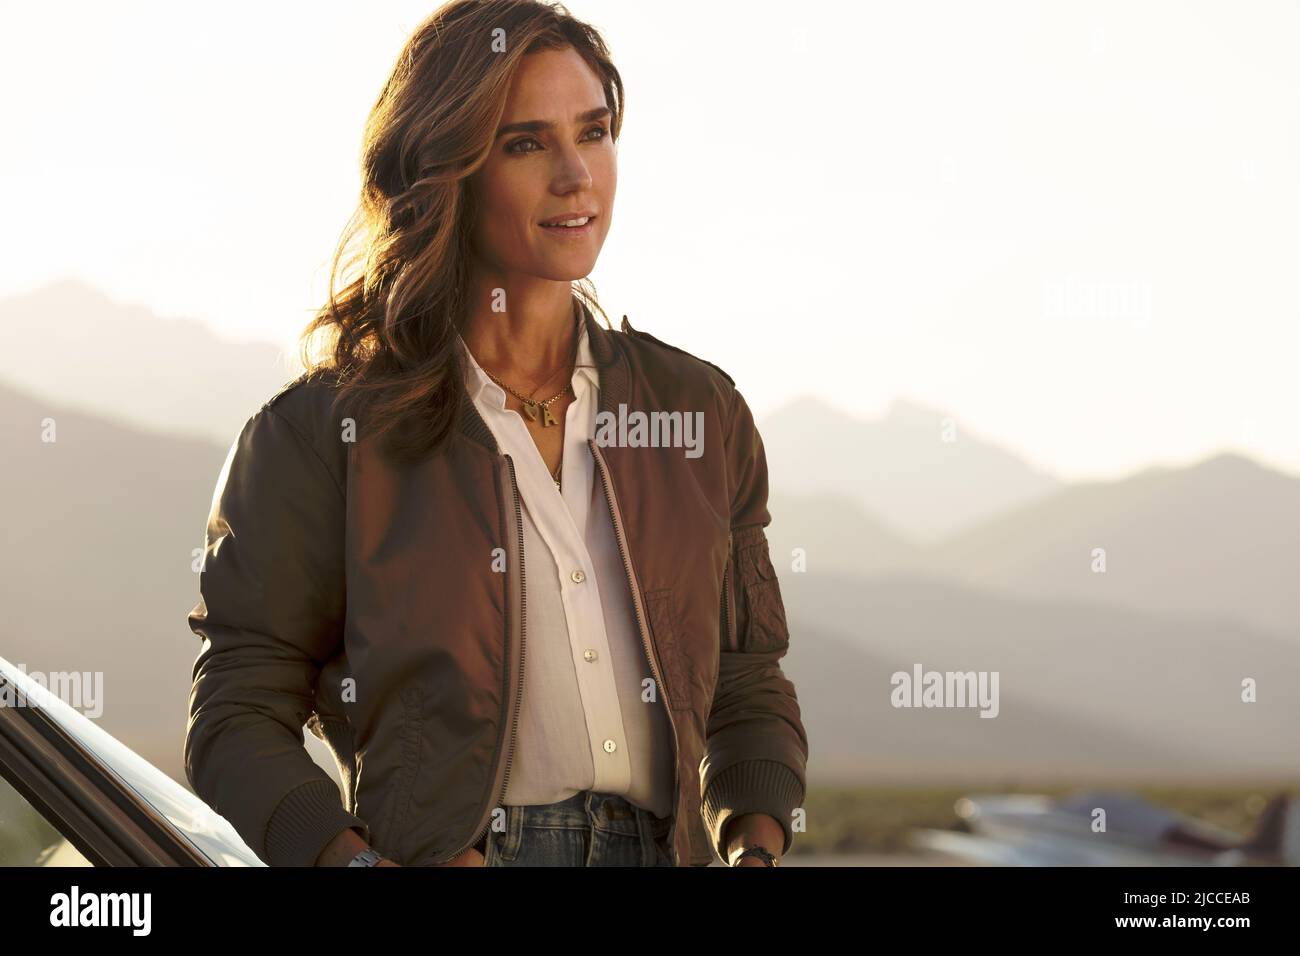 Top Gun: Maverick: Jennifer Connelly on Joseph Kosinski and Tom Cruise –  The Hollywood Reporter